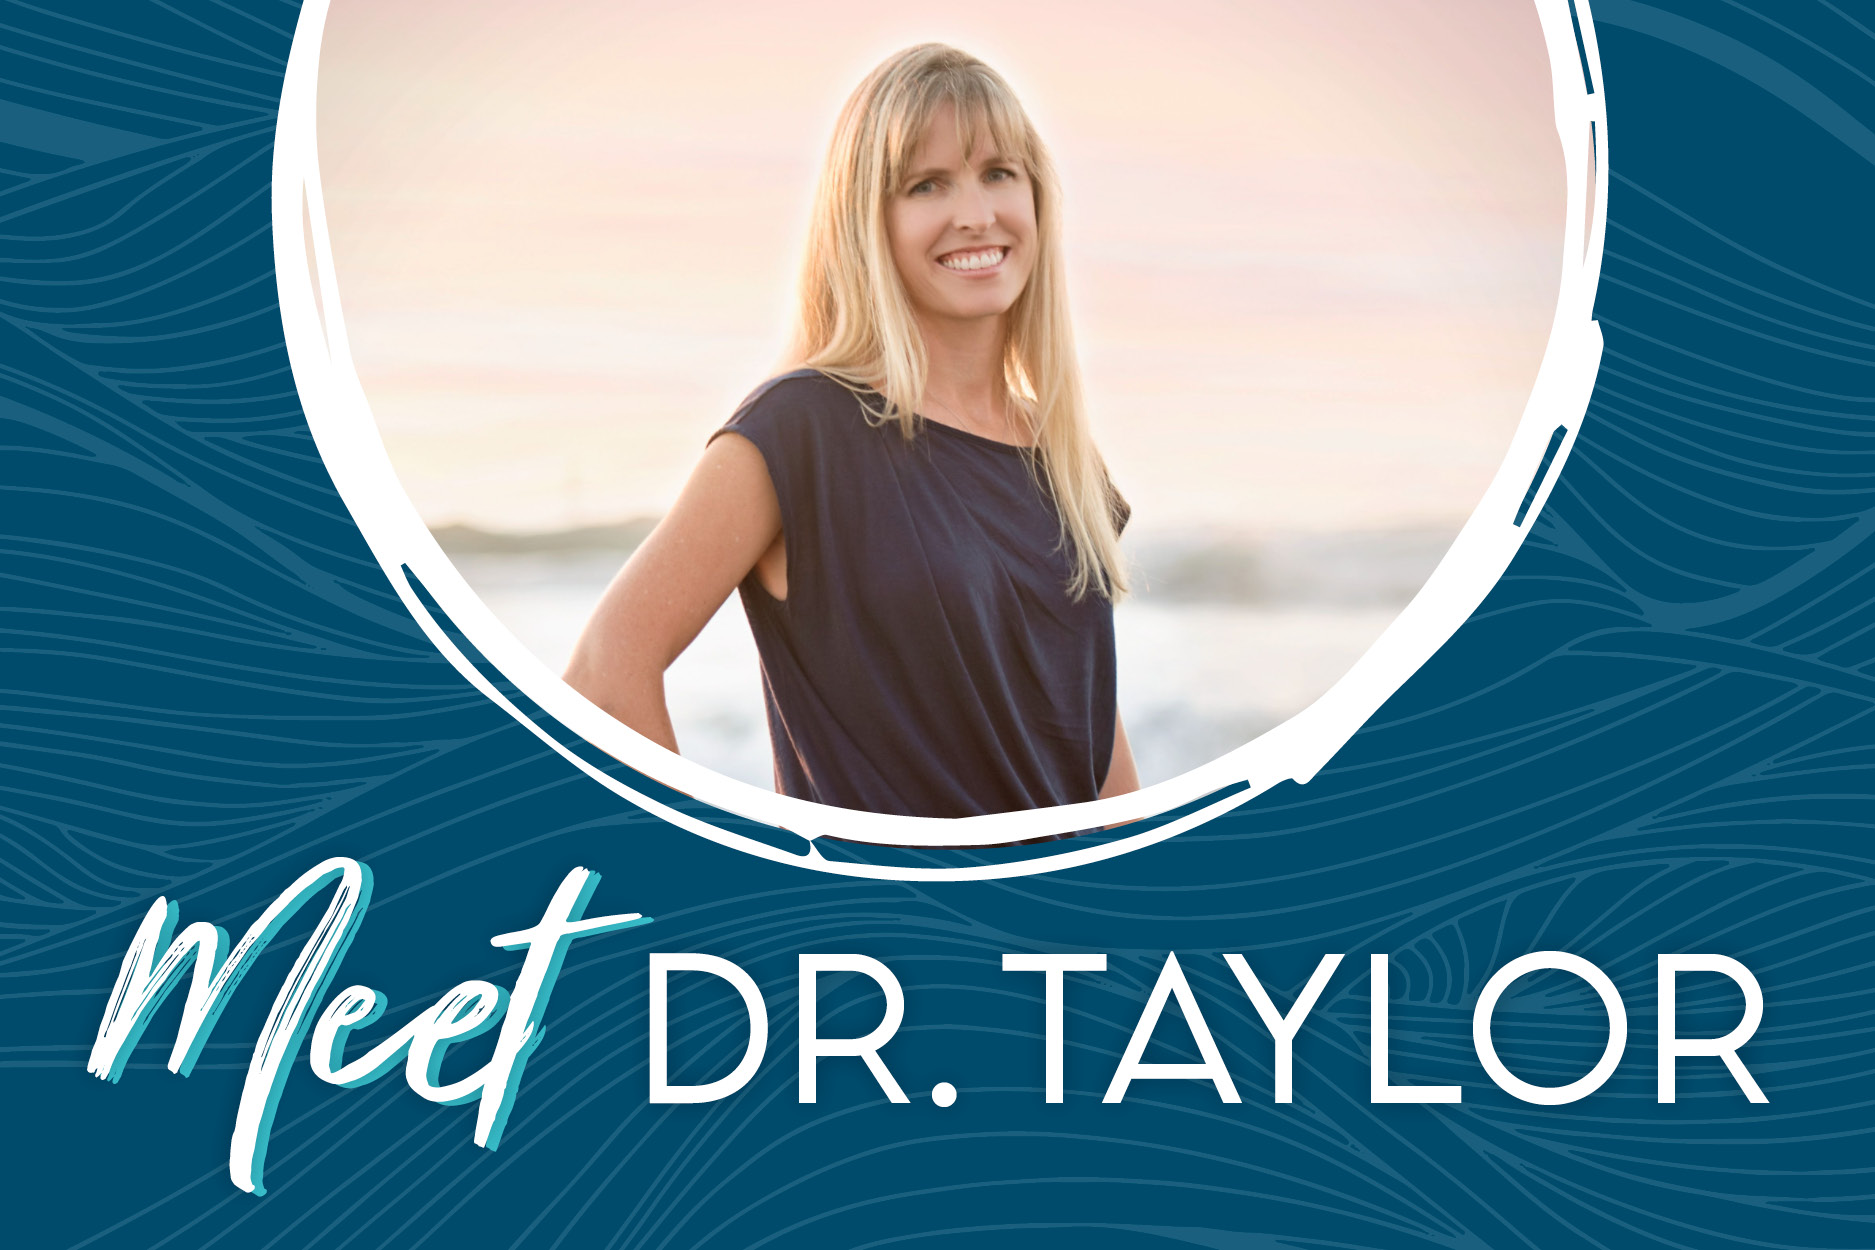 Meet Dr. Taylor